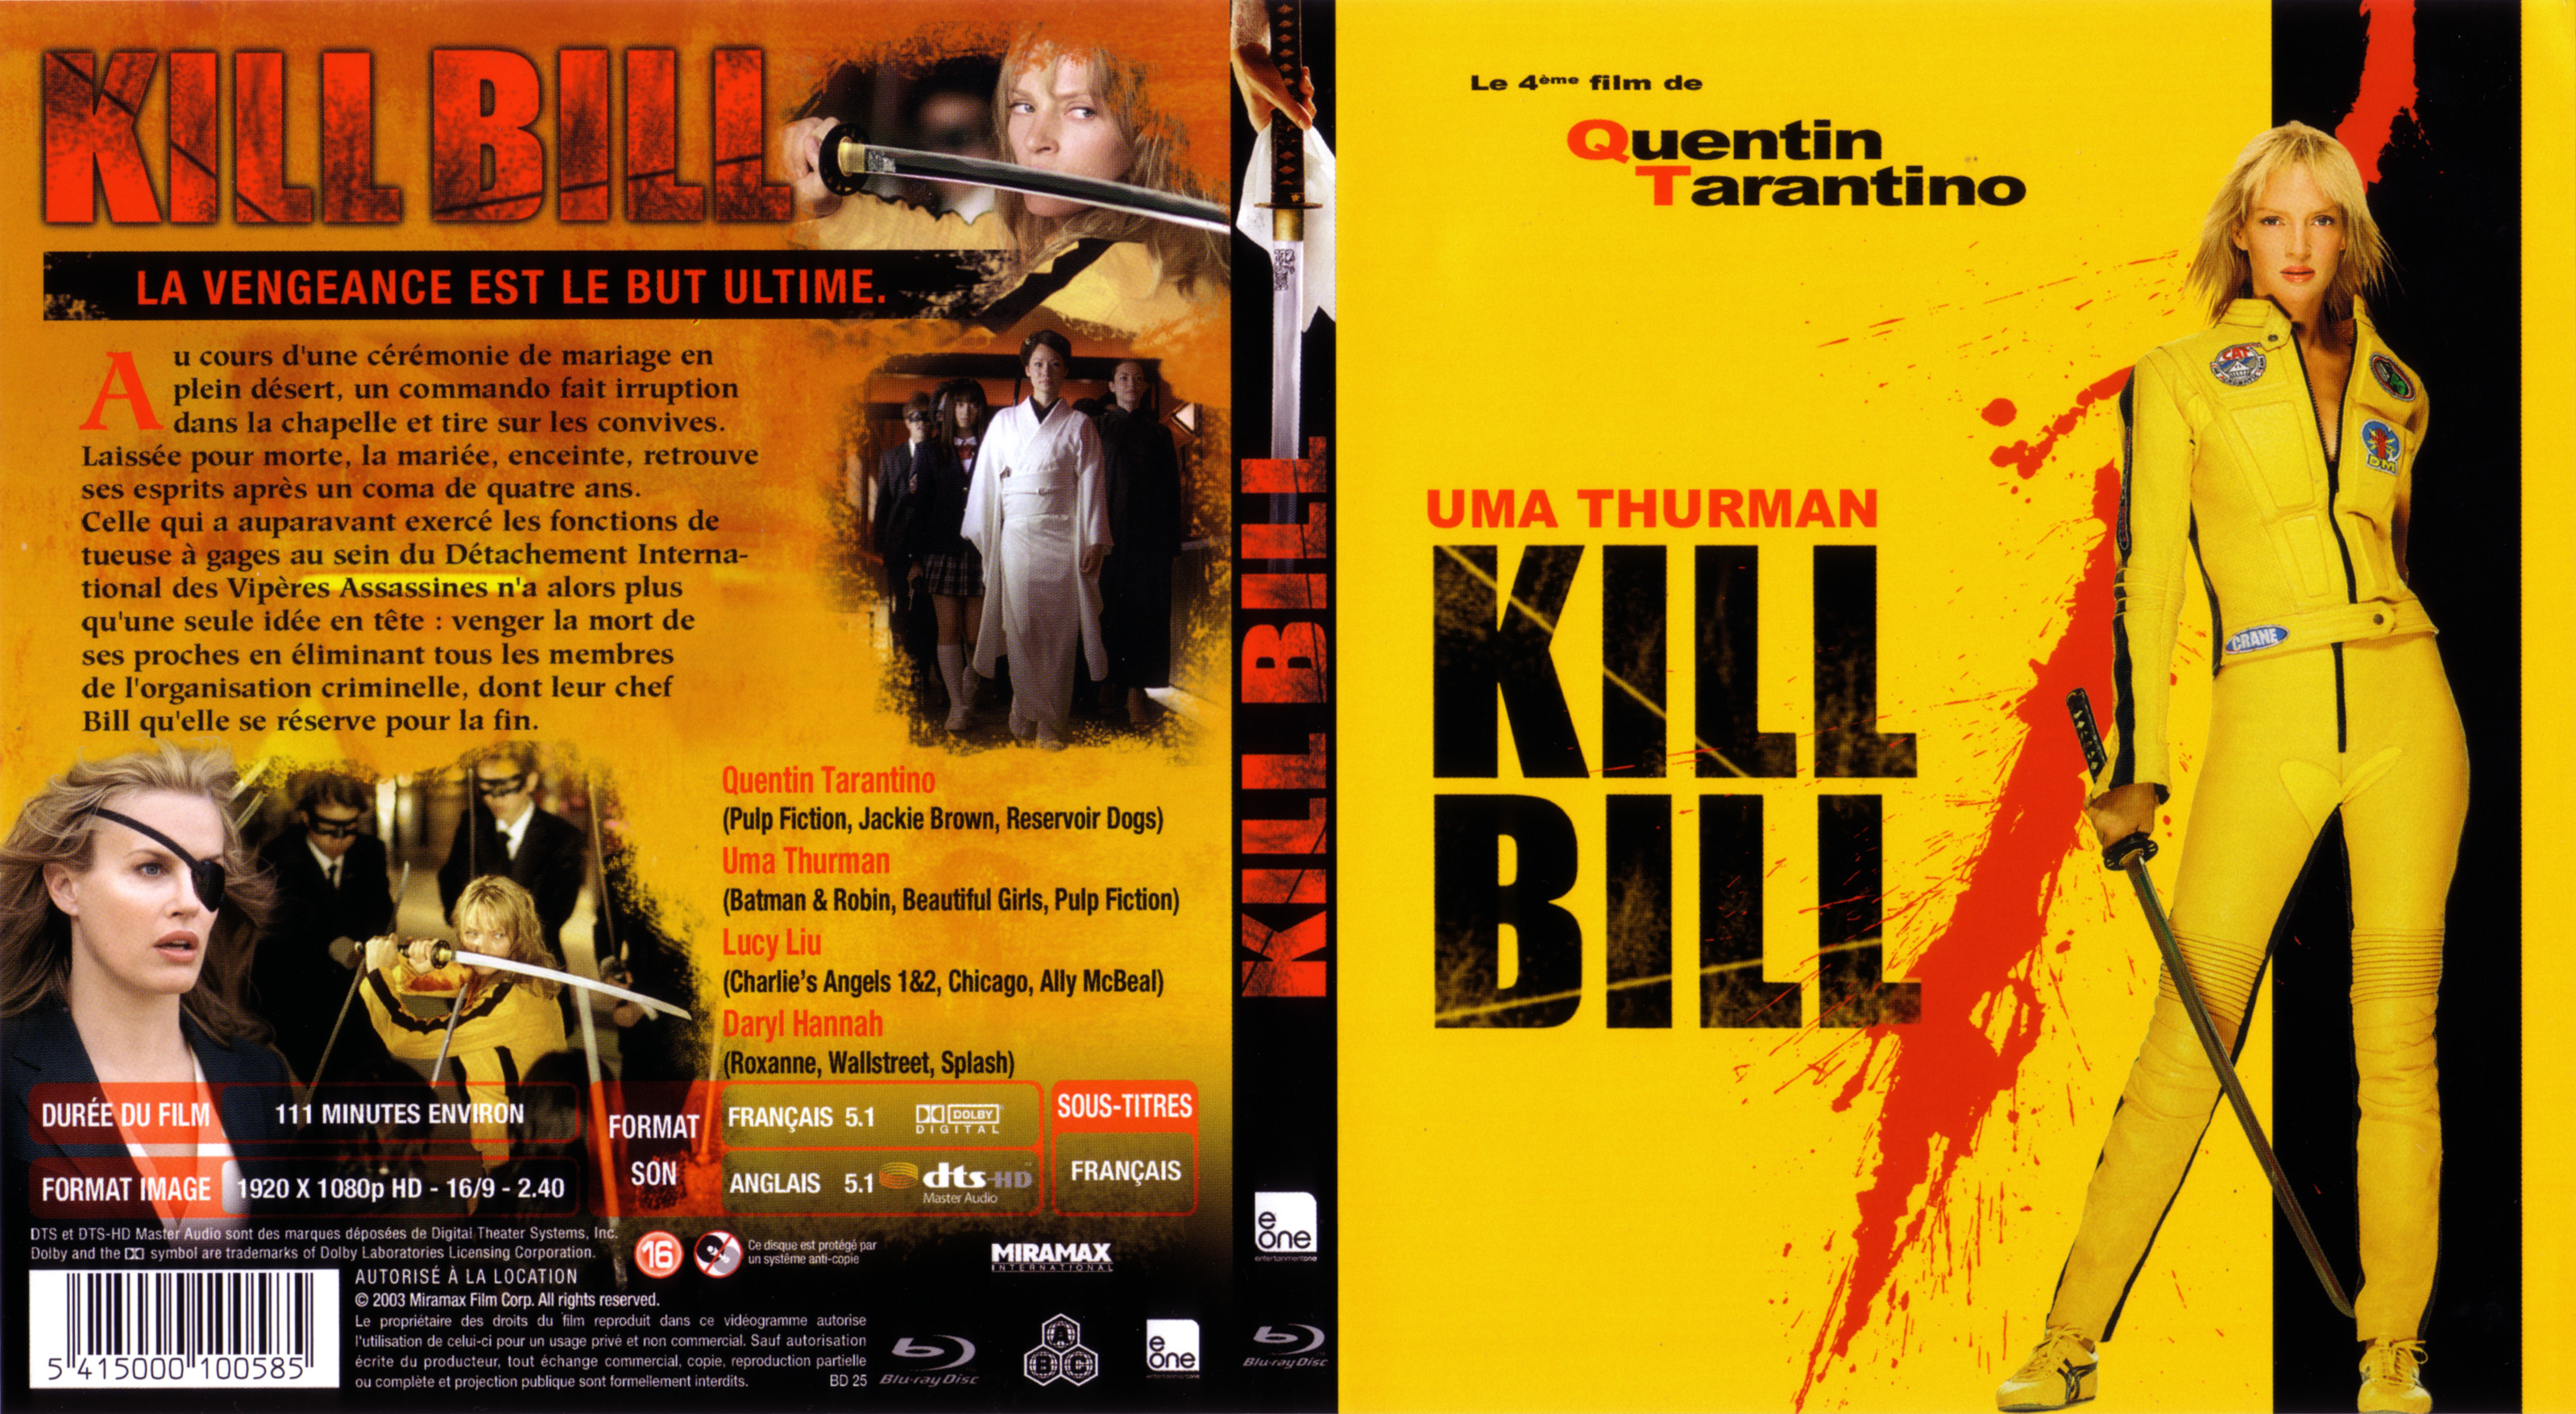 Jaquette DVD Kill Bill 1 (BLU-RAY) v2